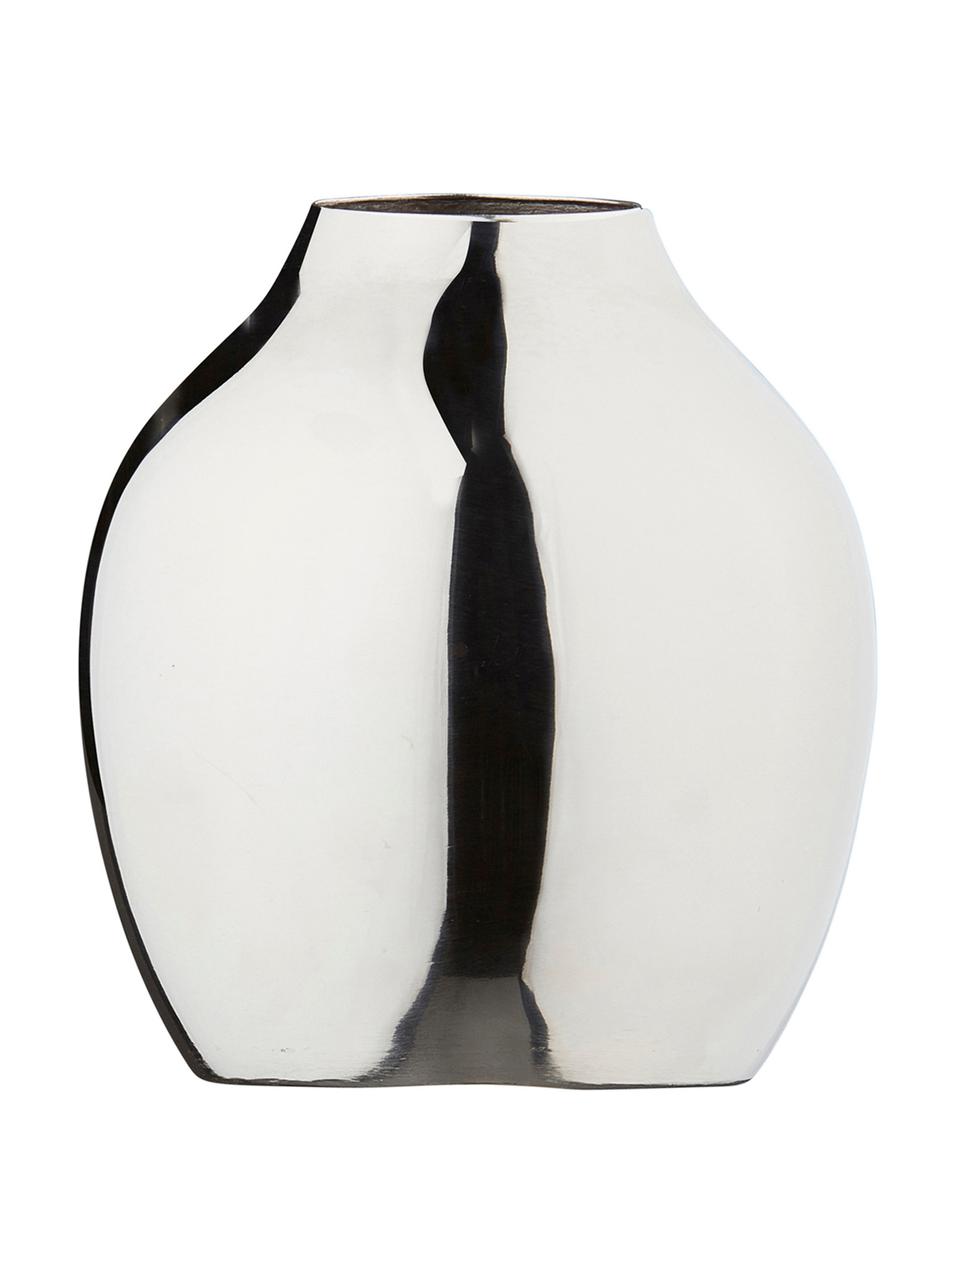 Kleine Vase Gunnebo aus Metall, Metall, lackiert, Metall, Ø 8 x H 10 cm